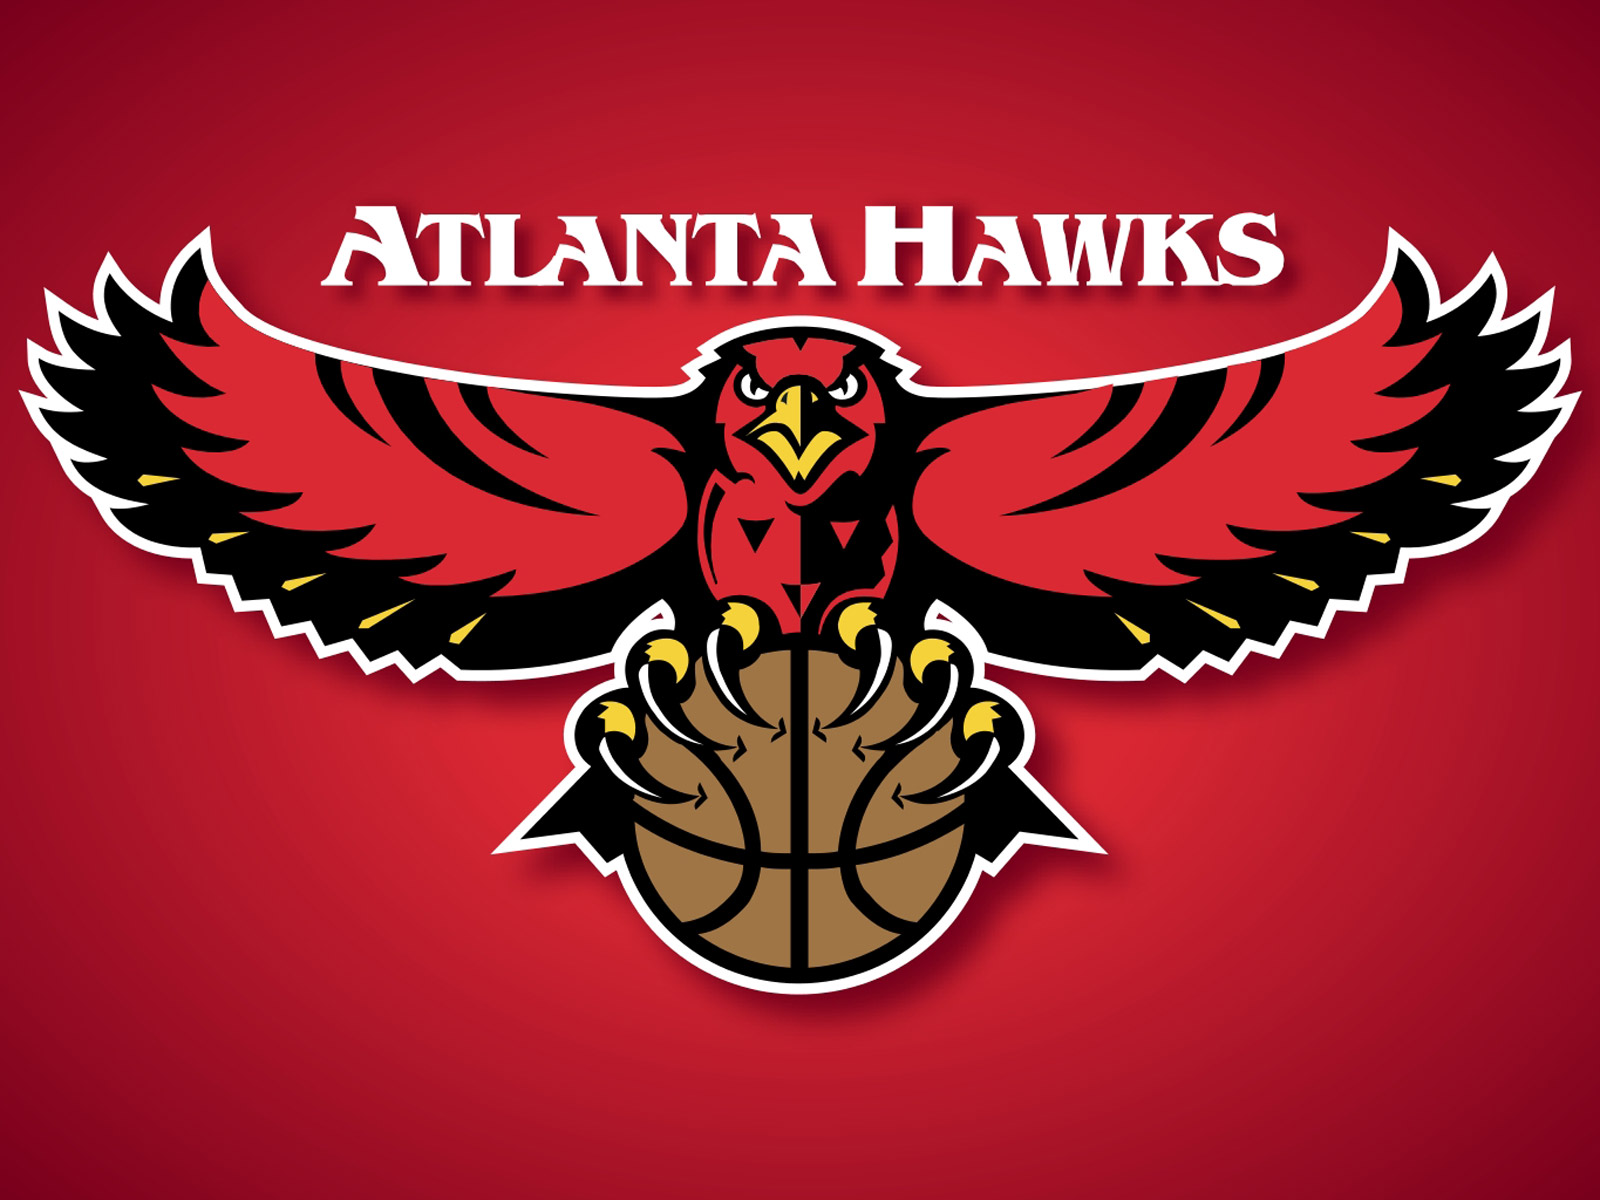 Atlanta Hawks Wallpaper Jpg